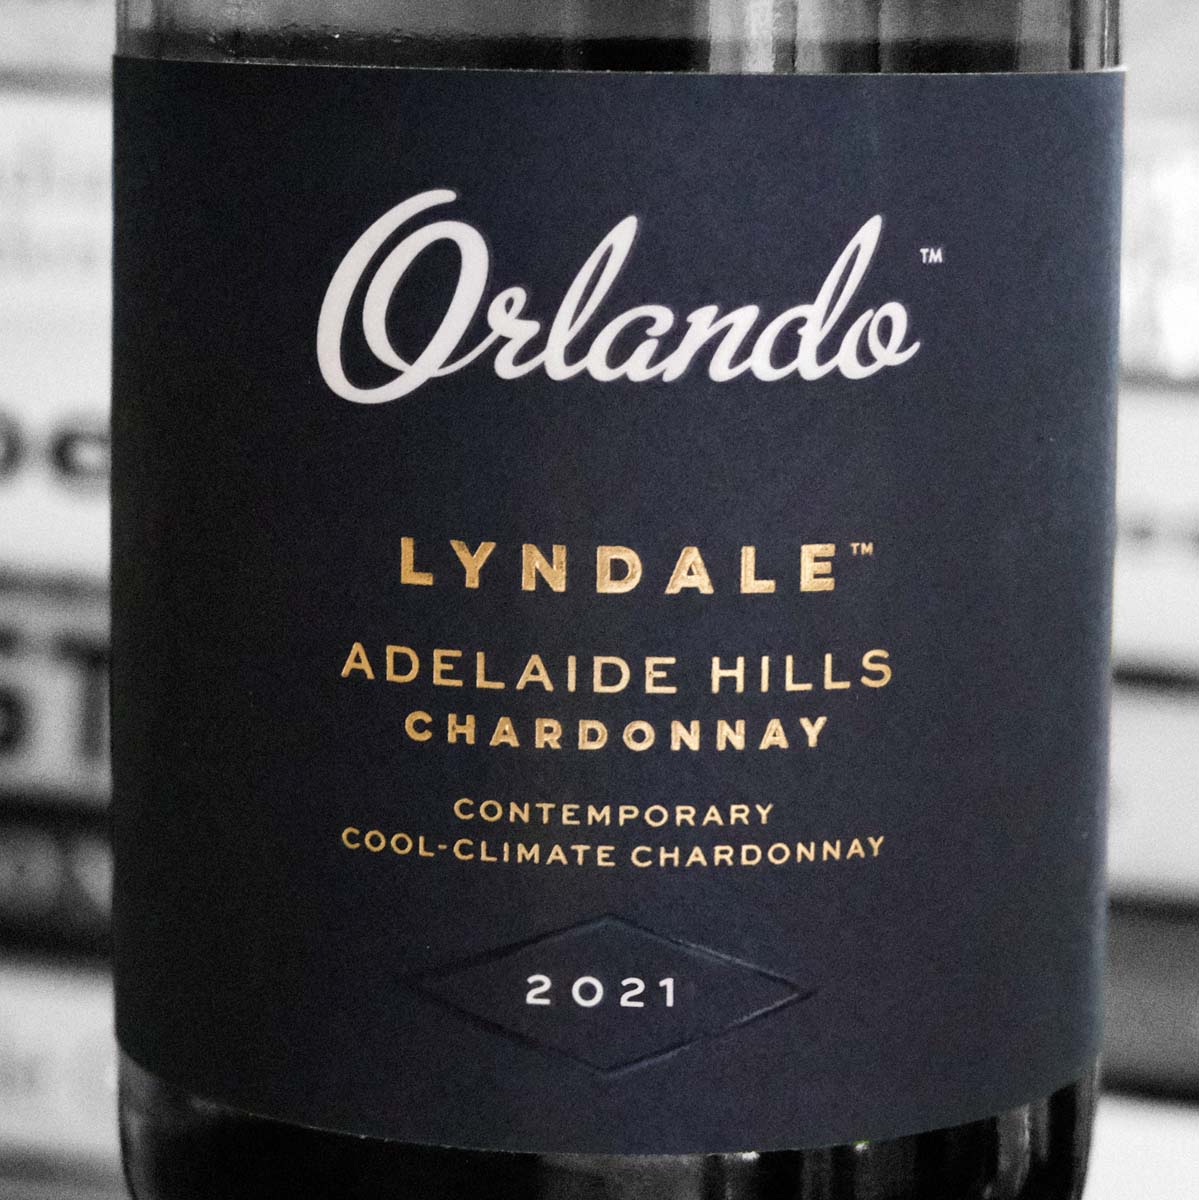 Orlando Lyndale Chardonnay 2021 Adelaide Hills, SA